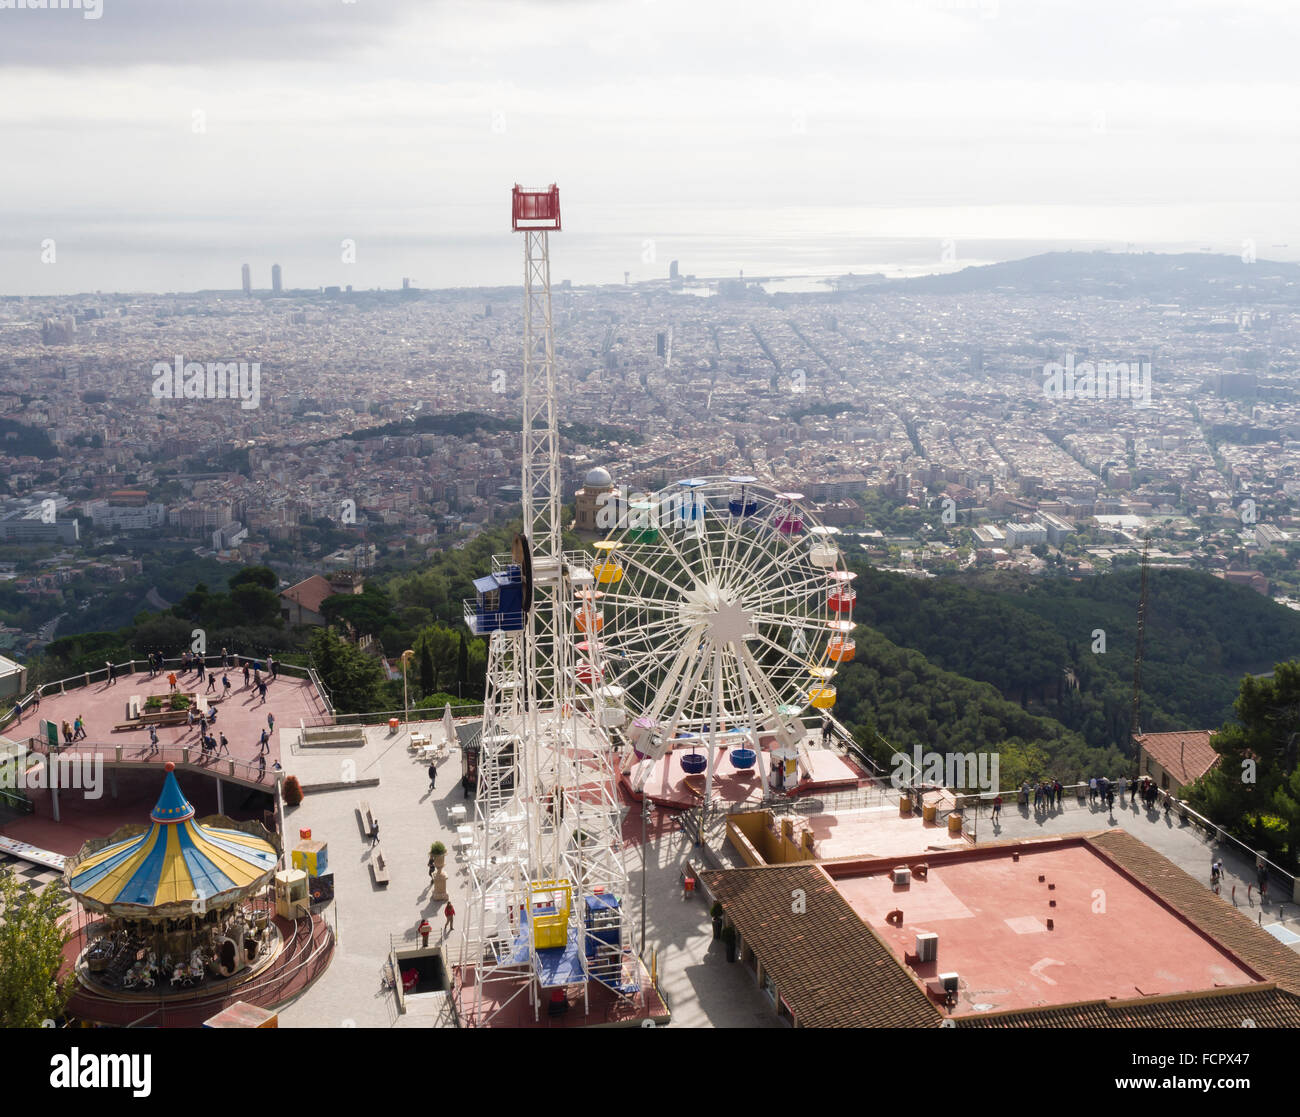 Amusement park on top of Tibidabo Mountain, Barcelona, Spain. Stock Photo